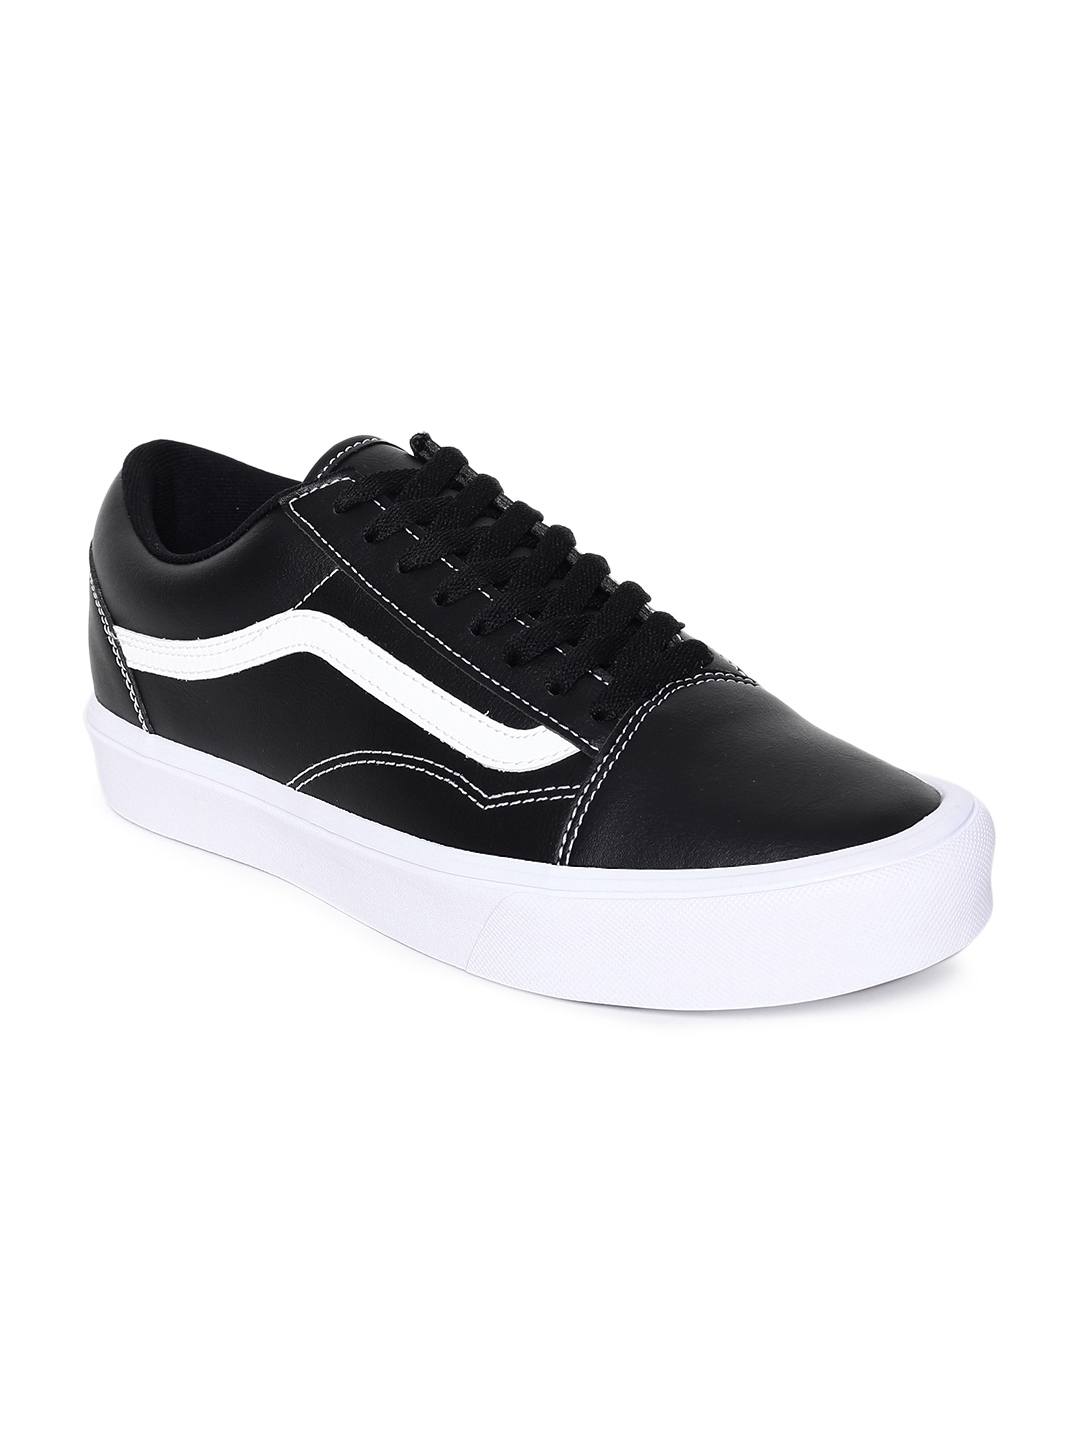 Buy Vans Unisex Black Sneakers - Casual Shoes for Unisex 7301175 | Myntra